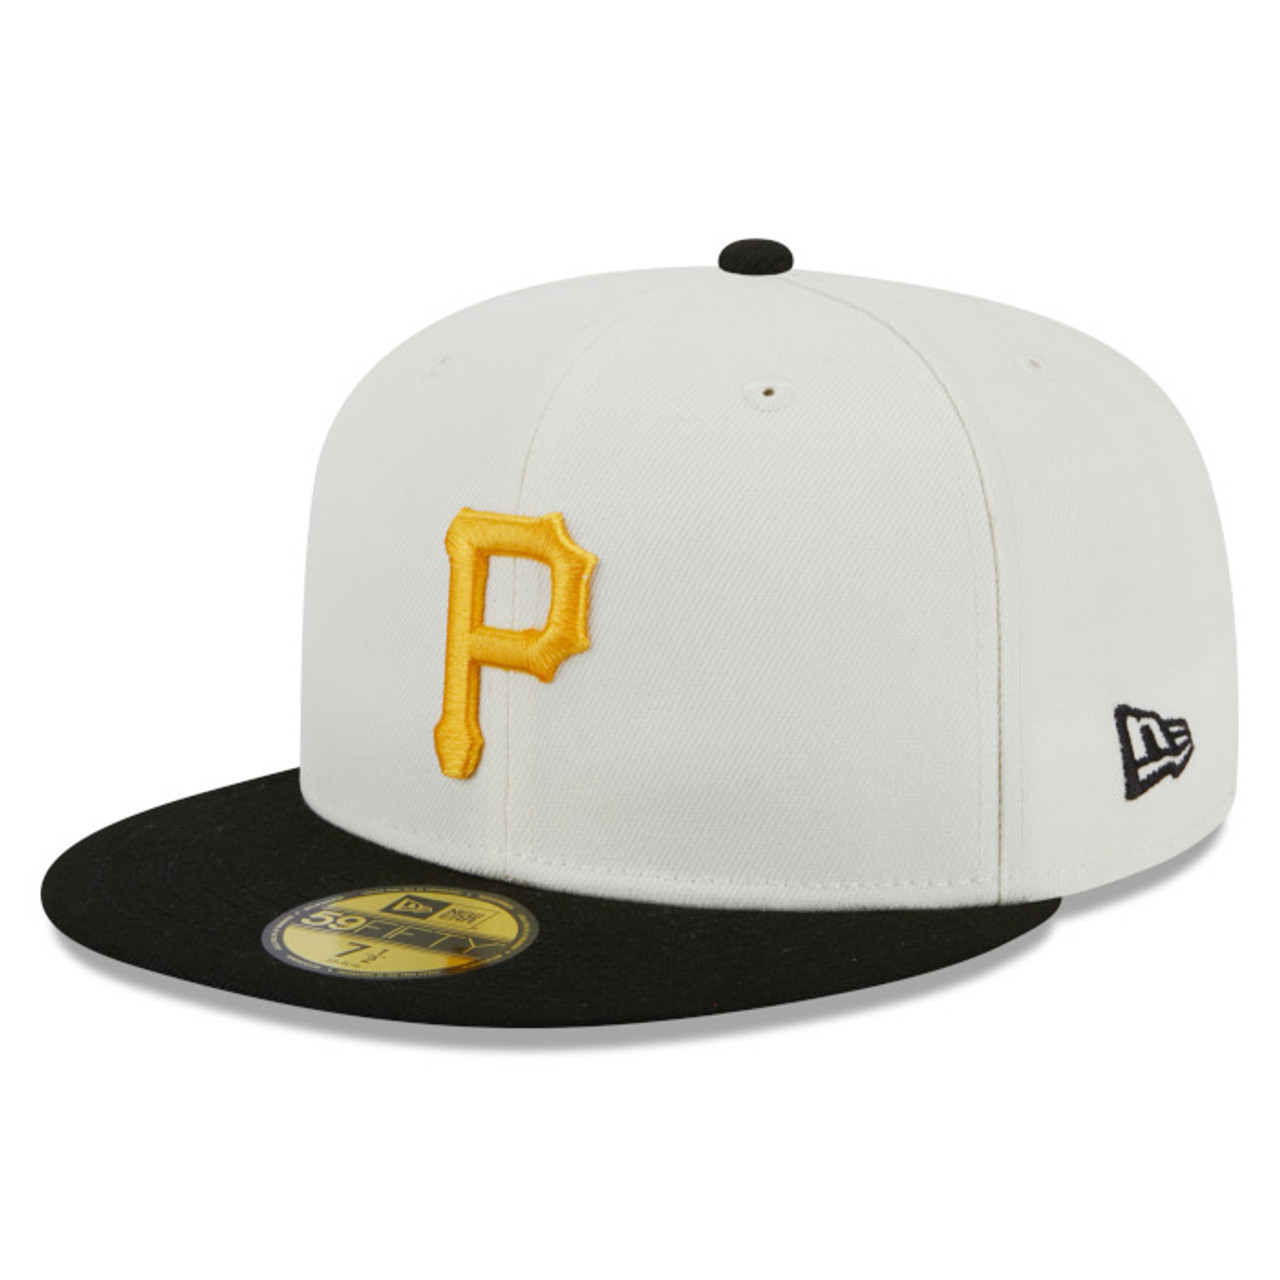 pittsburgh pirates baseball gear